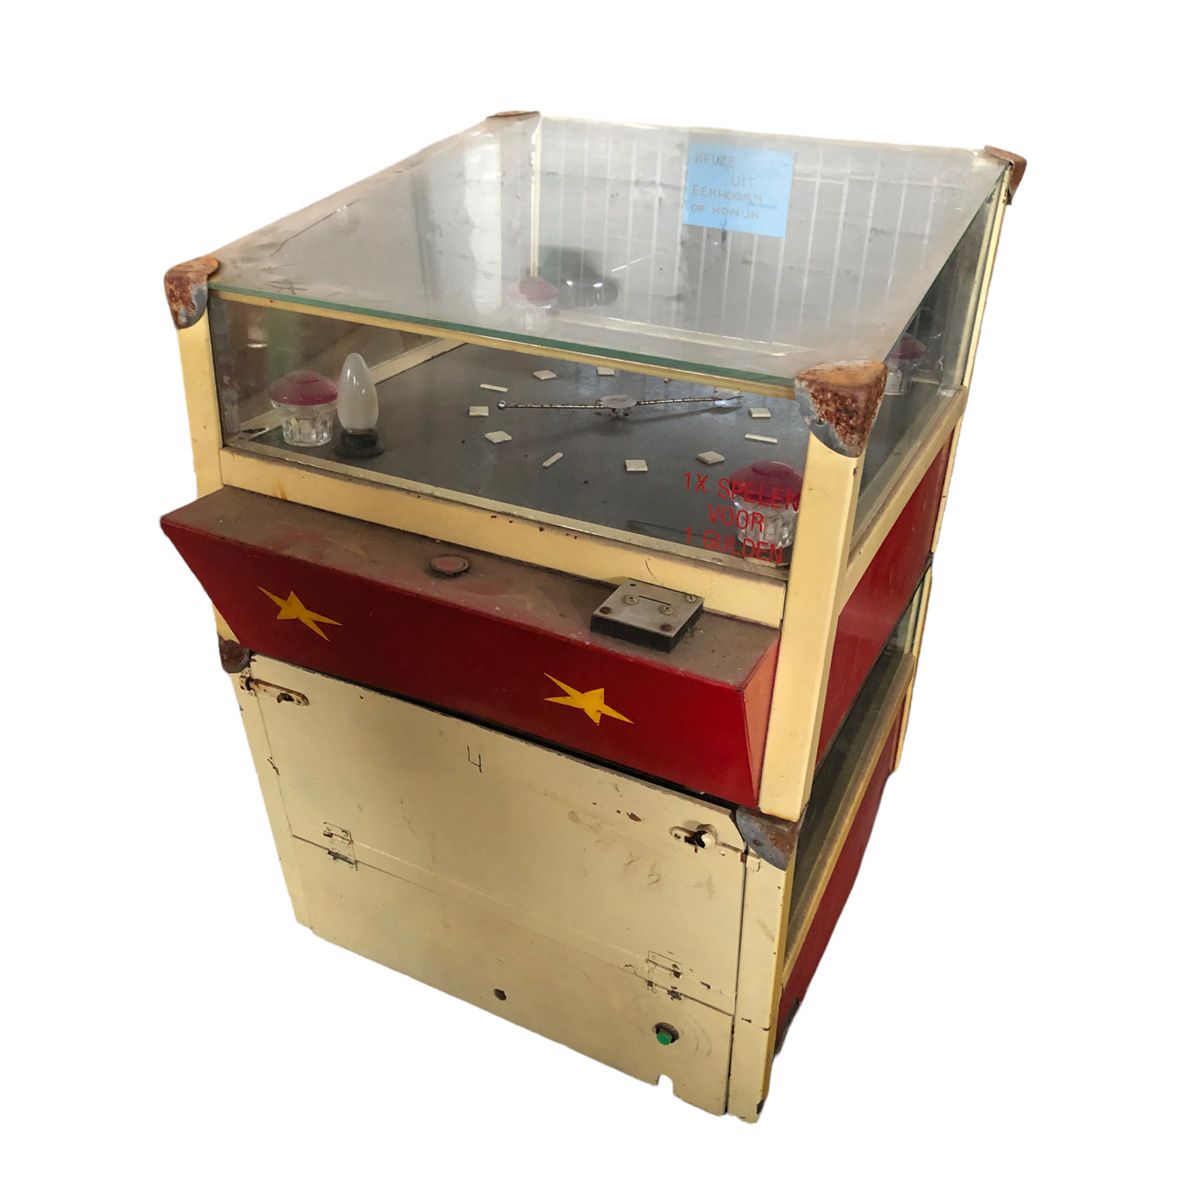 A Set of 2 Barn-found Dutch Tabletop Arcade Games 一套2个在谷仓发现的荷兰投币式桌面街机游戏。游戏场地类似于一&hellip;